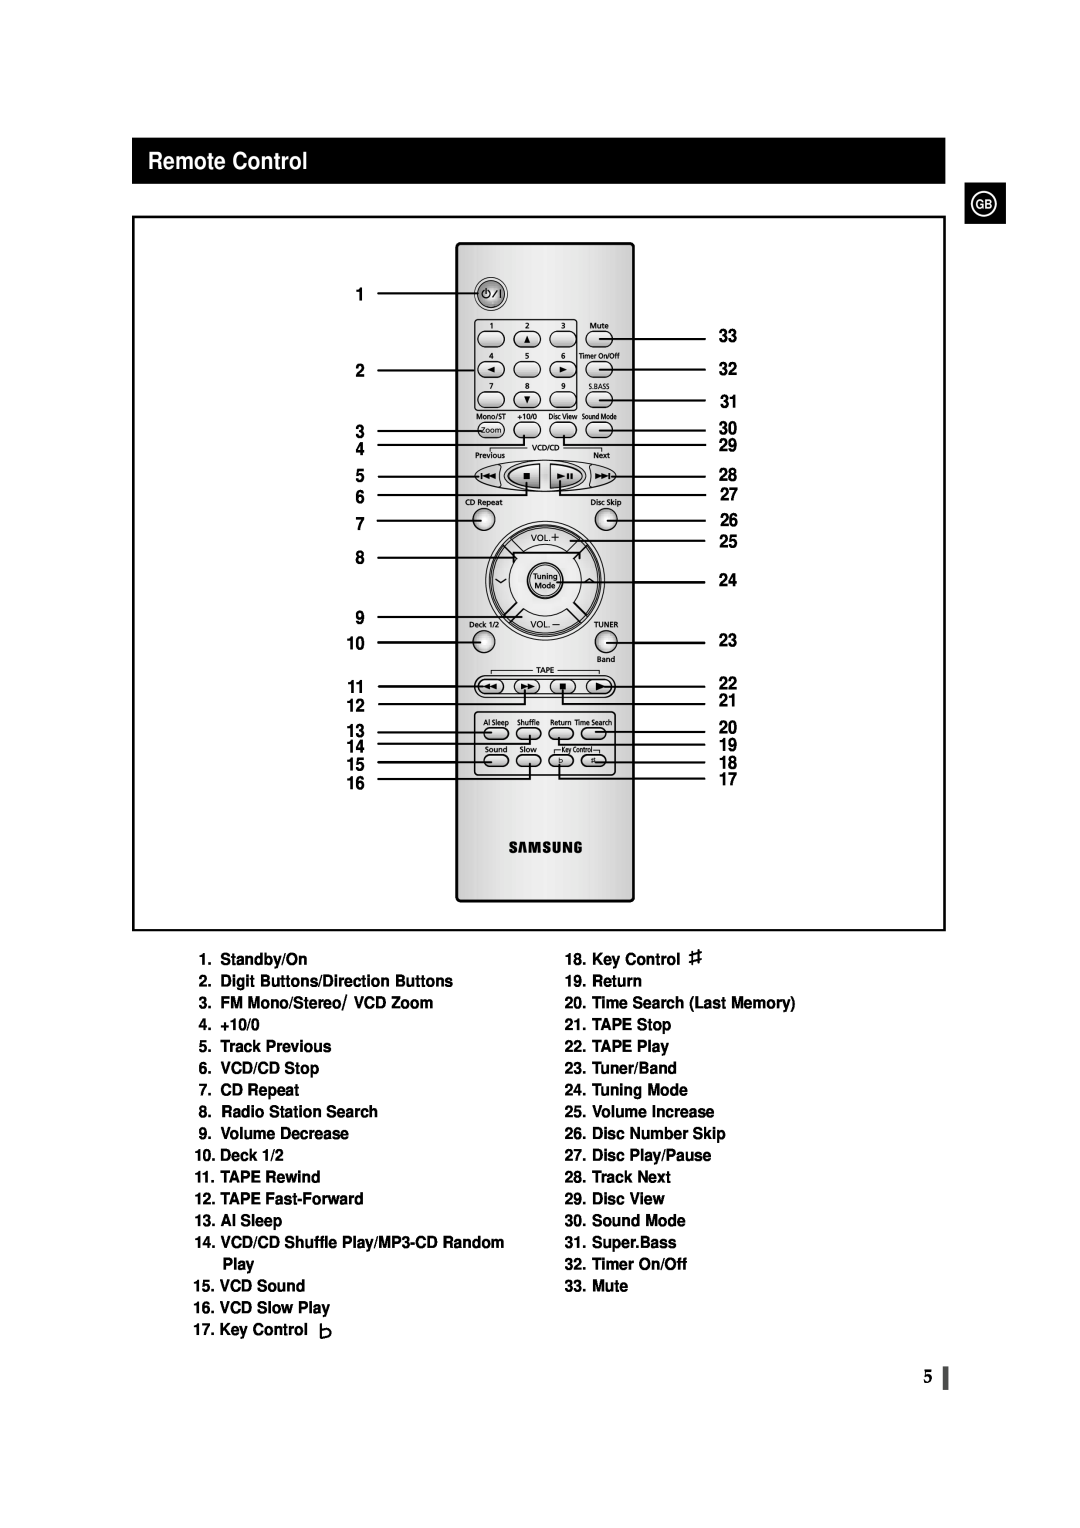 Samsung MAX-VS530 instruction manual Remote Control 